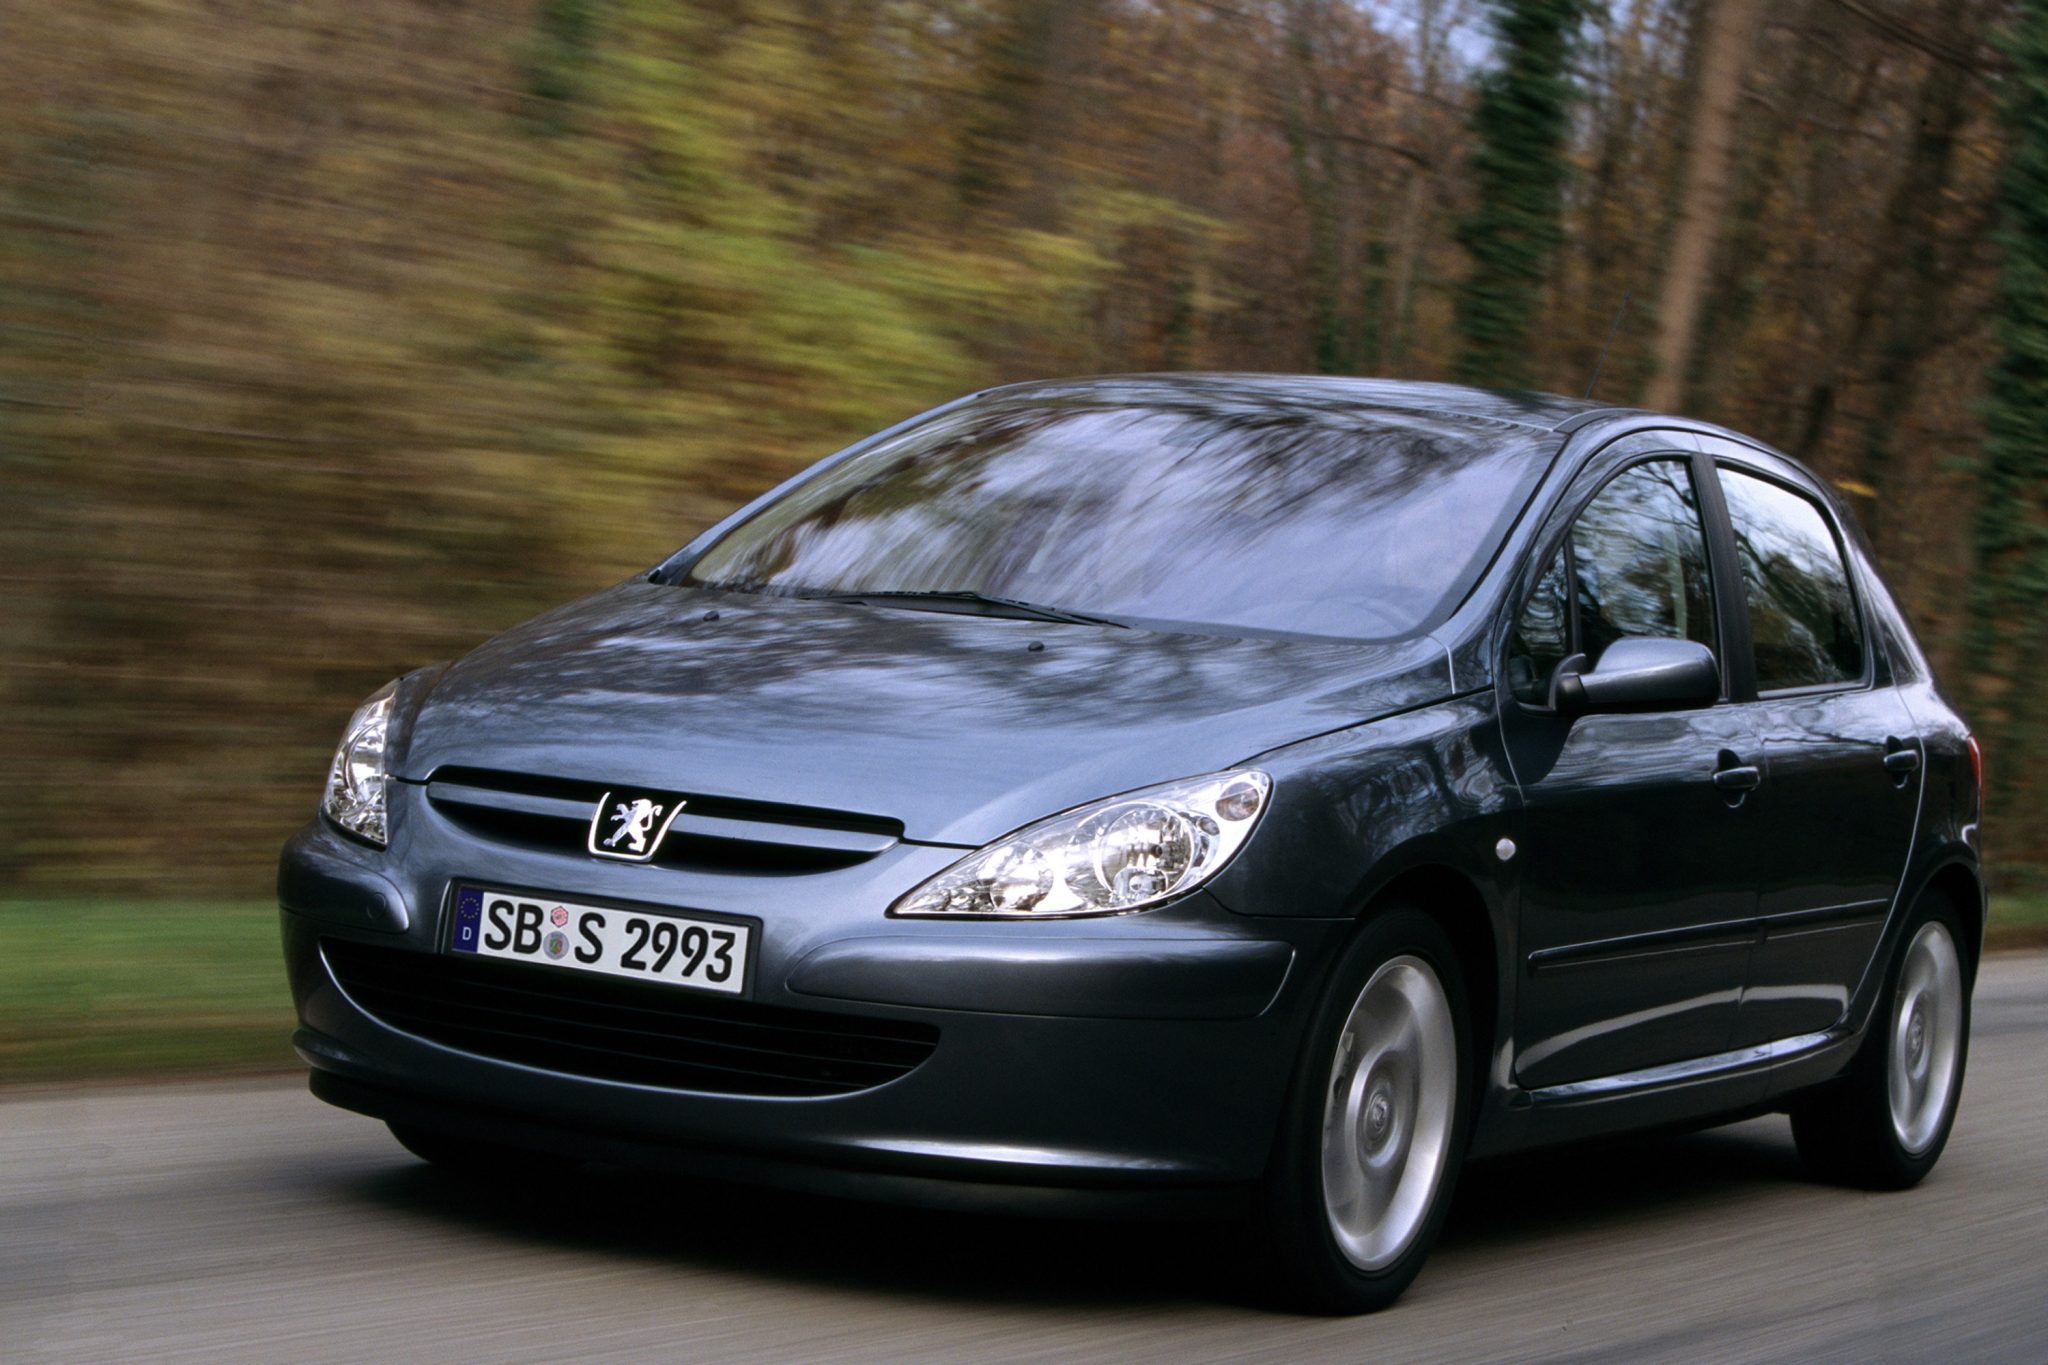 Peugeot 307 CC (2003 - 2009) used car review, Car review